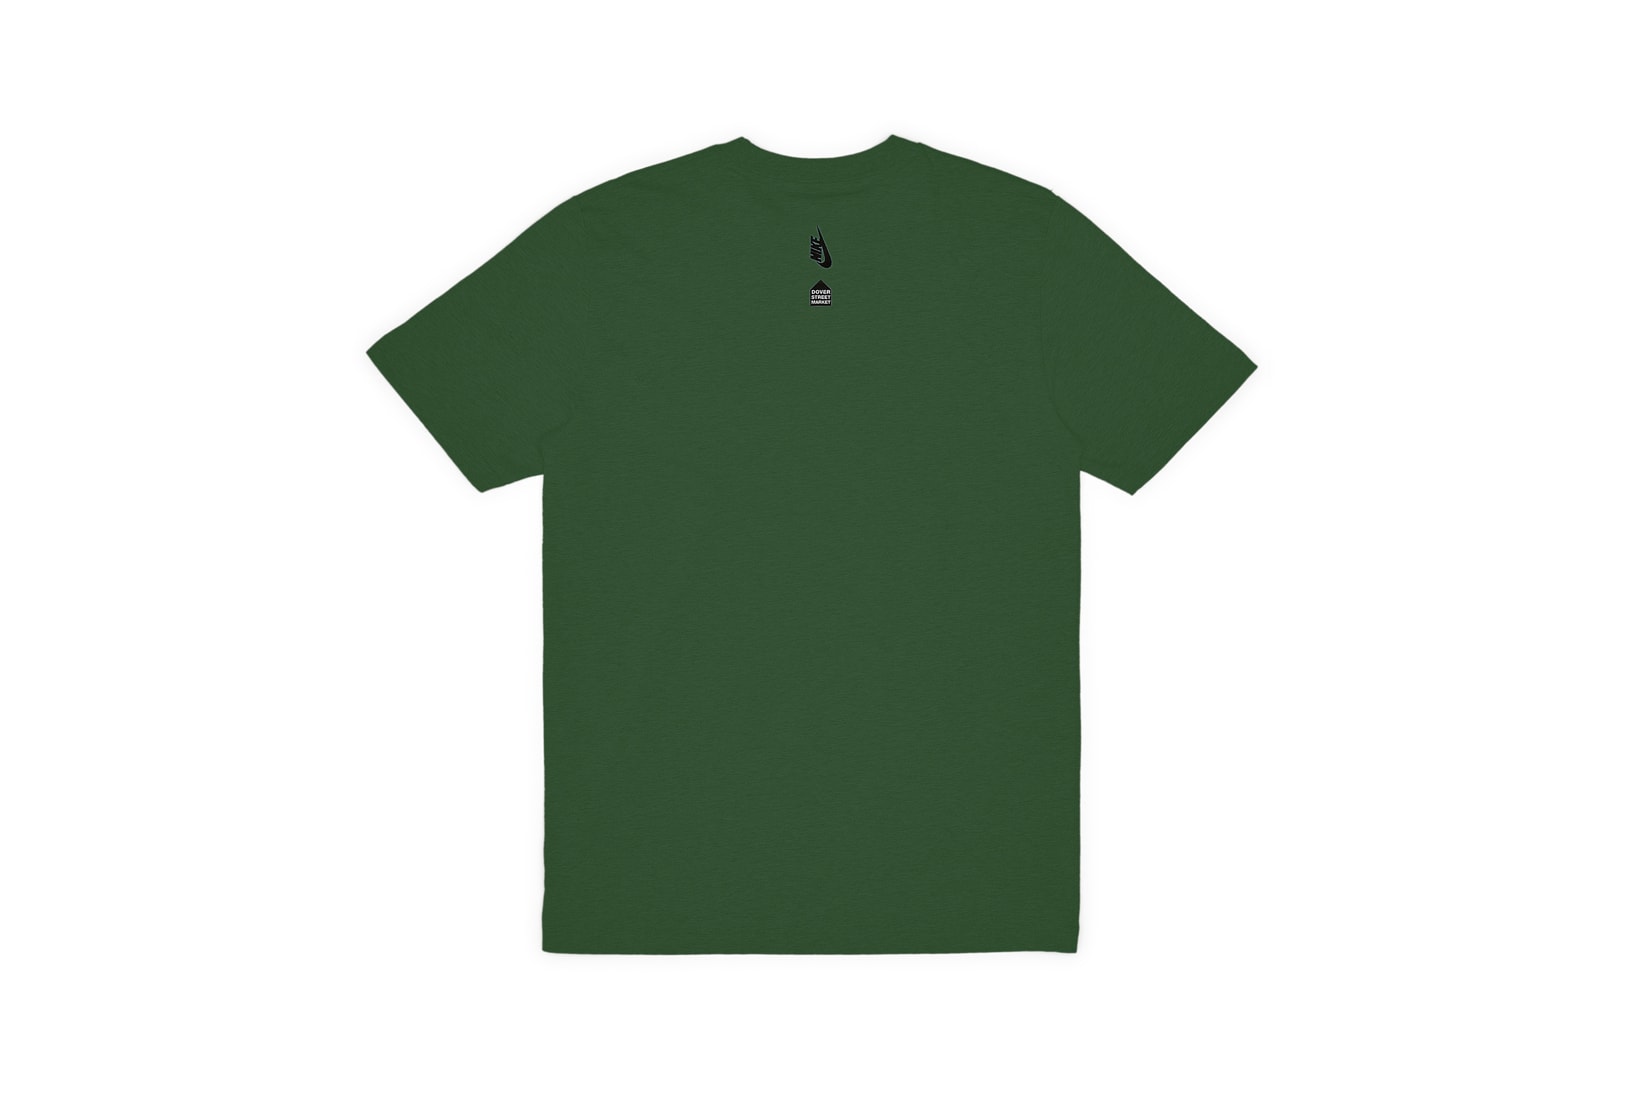 Nike x Dover Street Market Just Do It T-shirt Green